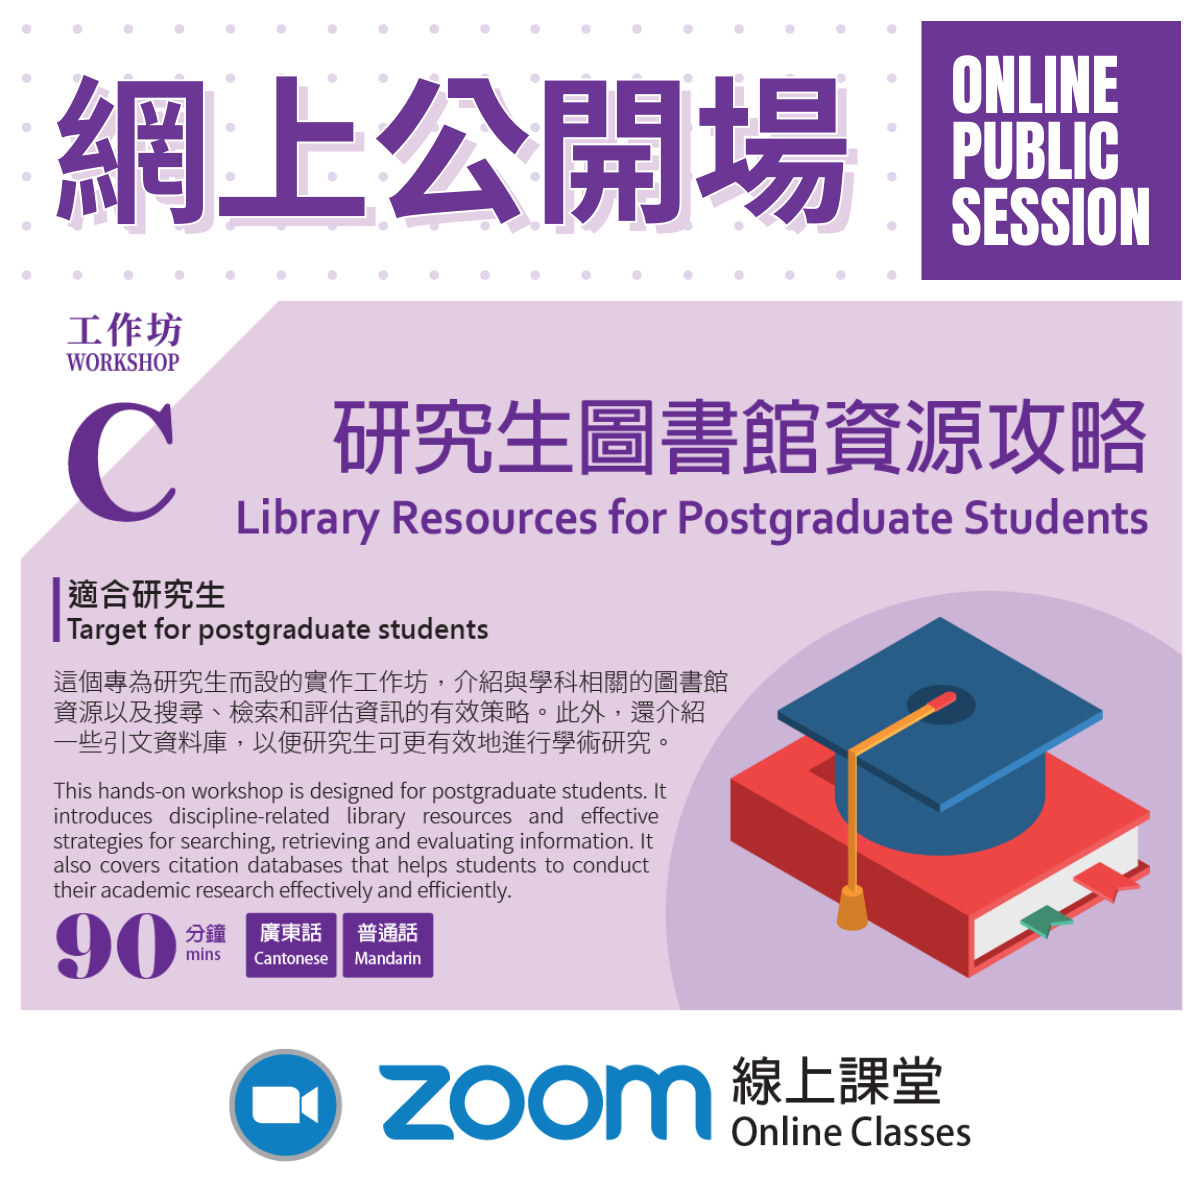 LIBRARY WORKSHOP C (Online Public Session)